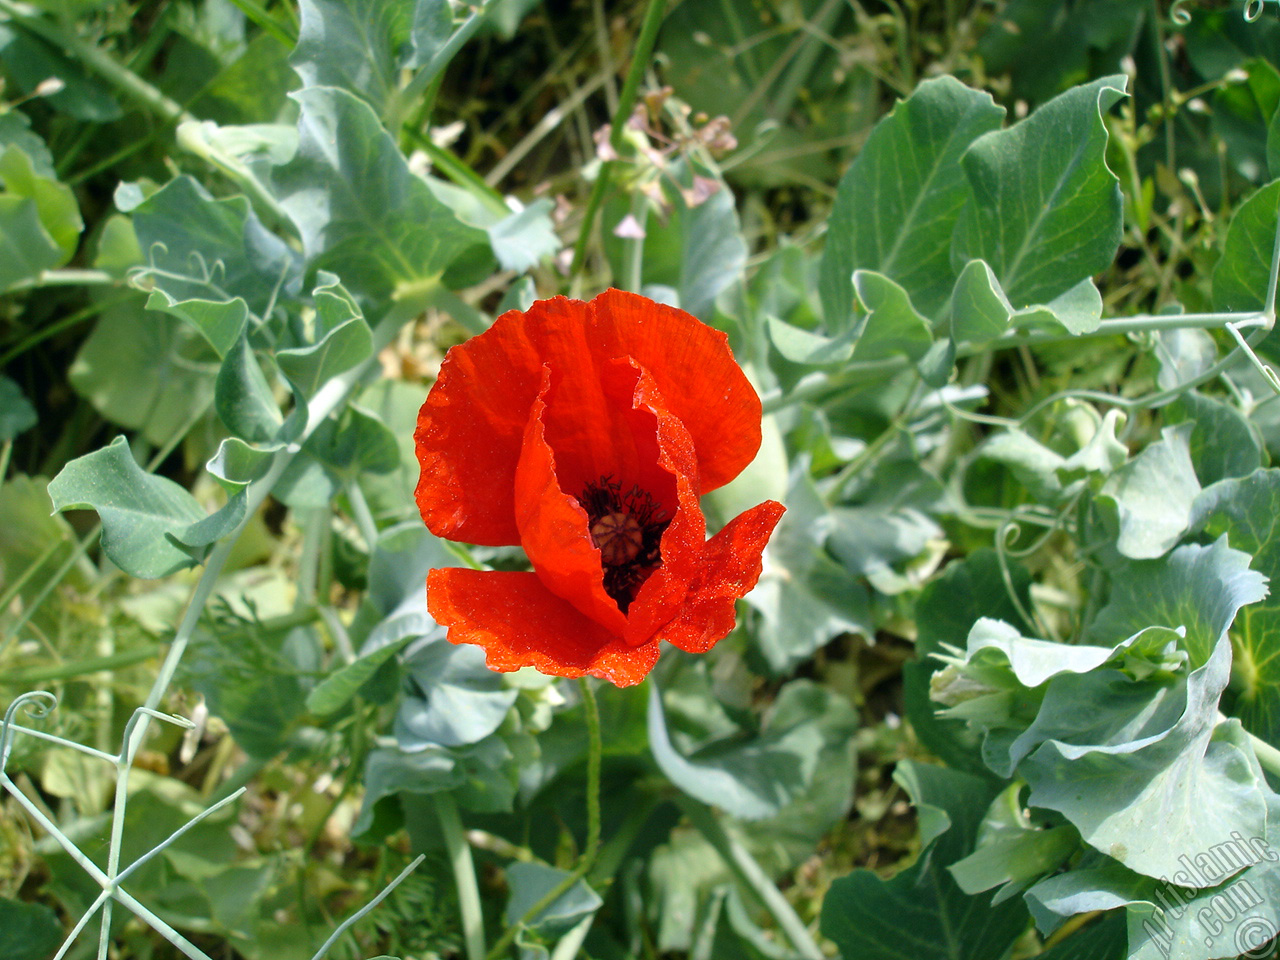 Red poppy flower.
